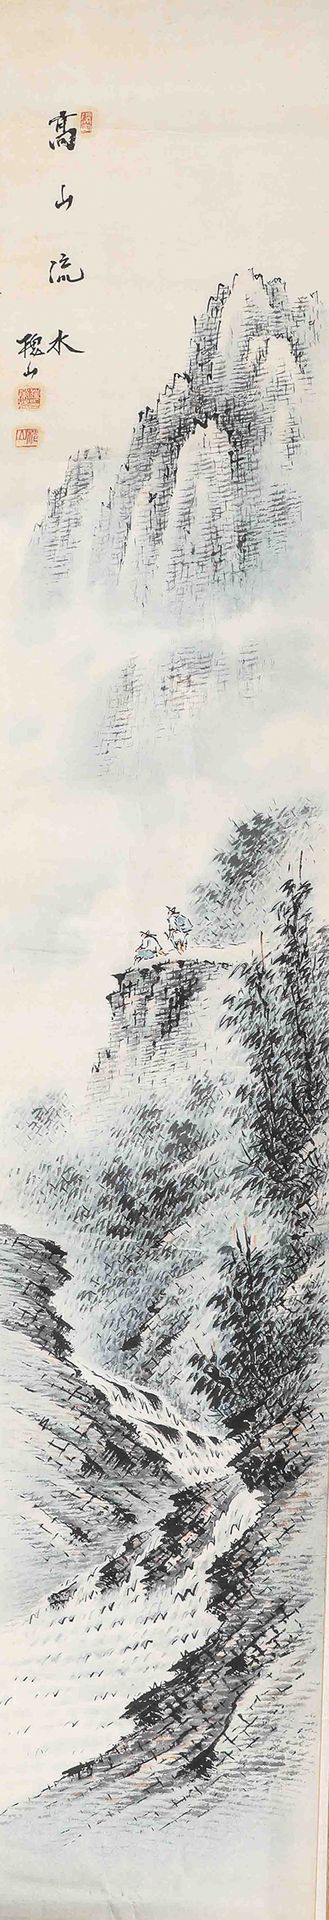 Null 
Kakemono，山地画。

中国 20世纪

H.122厘米，长22厘米

(签名)